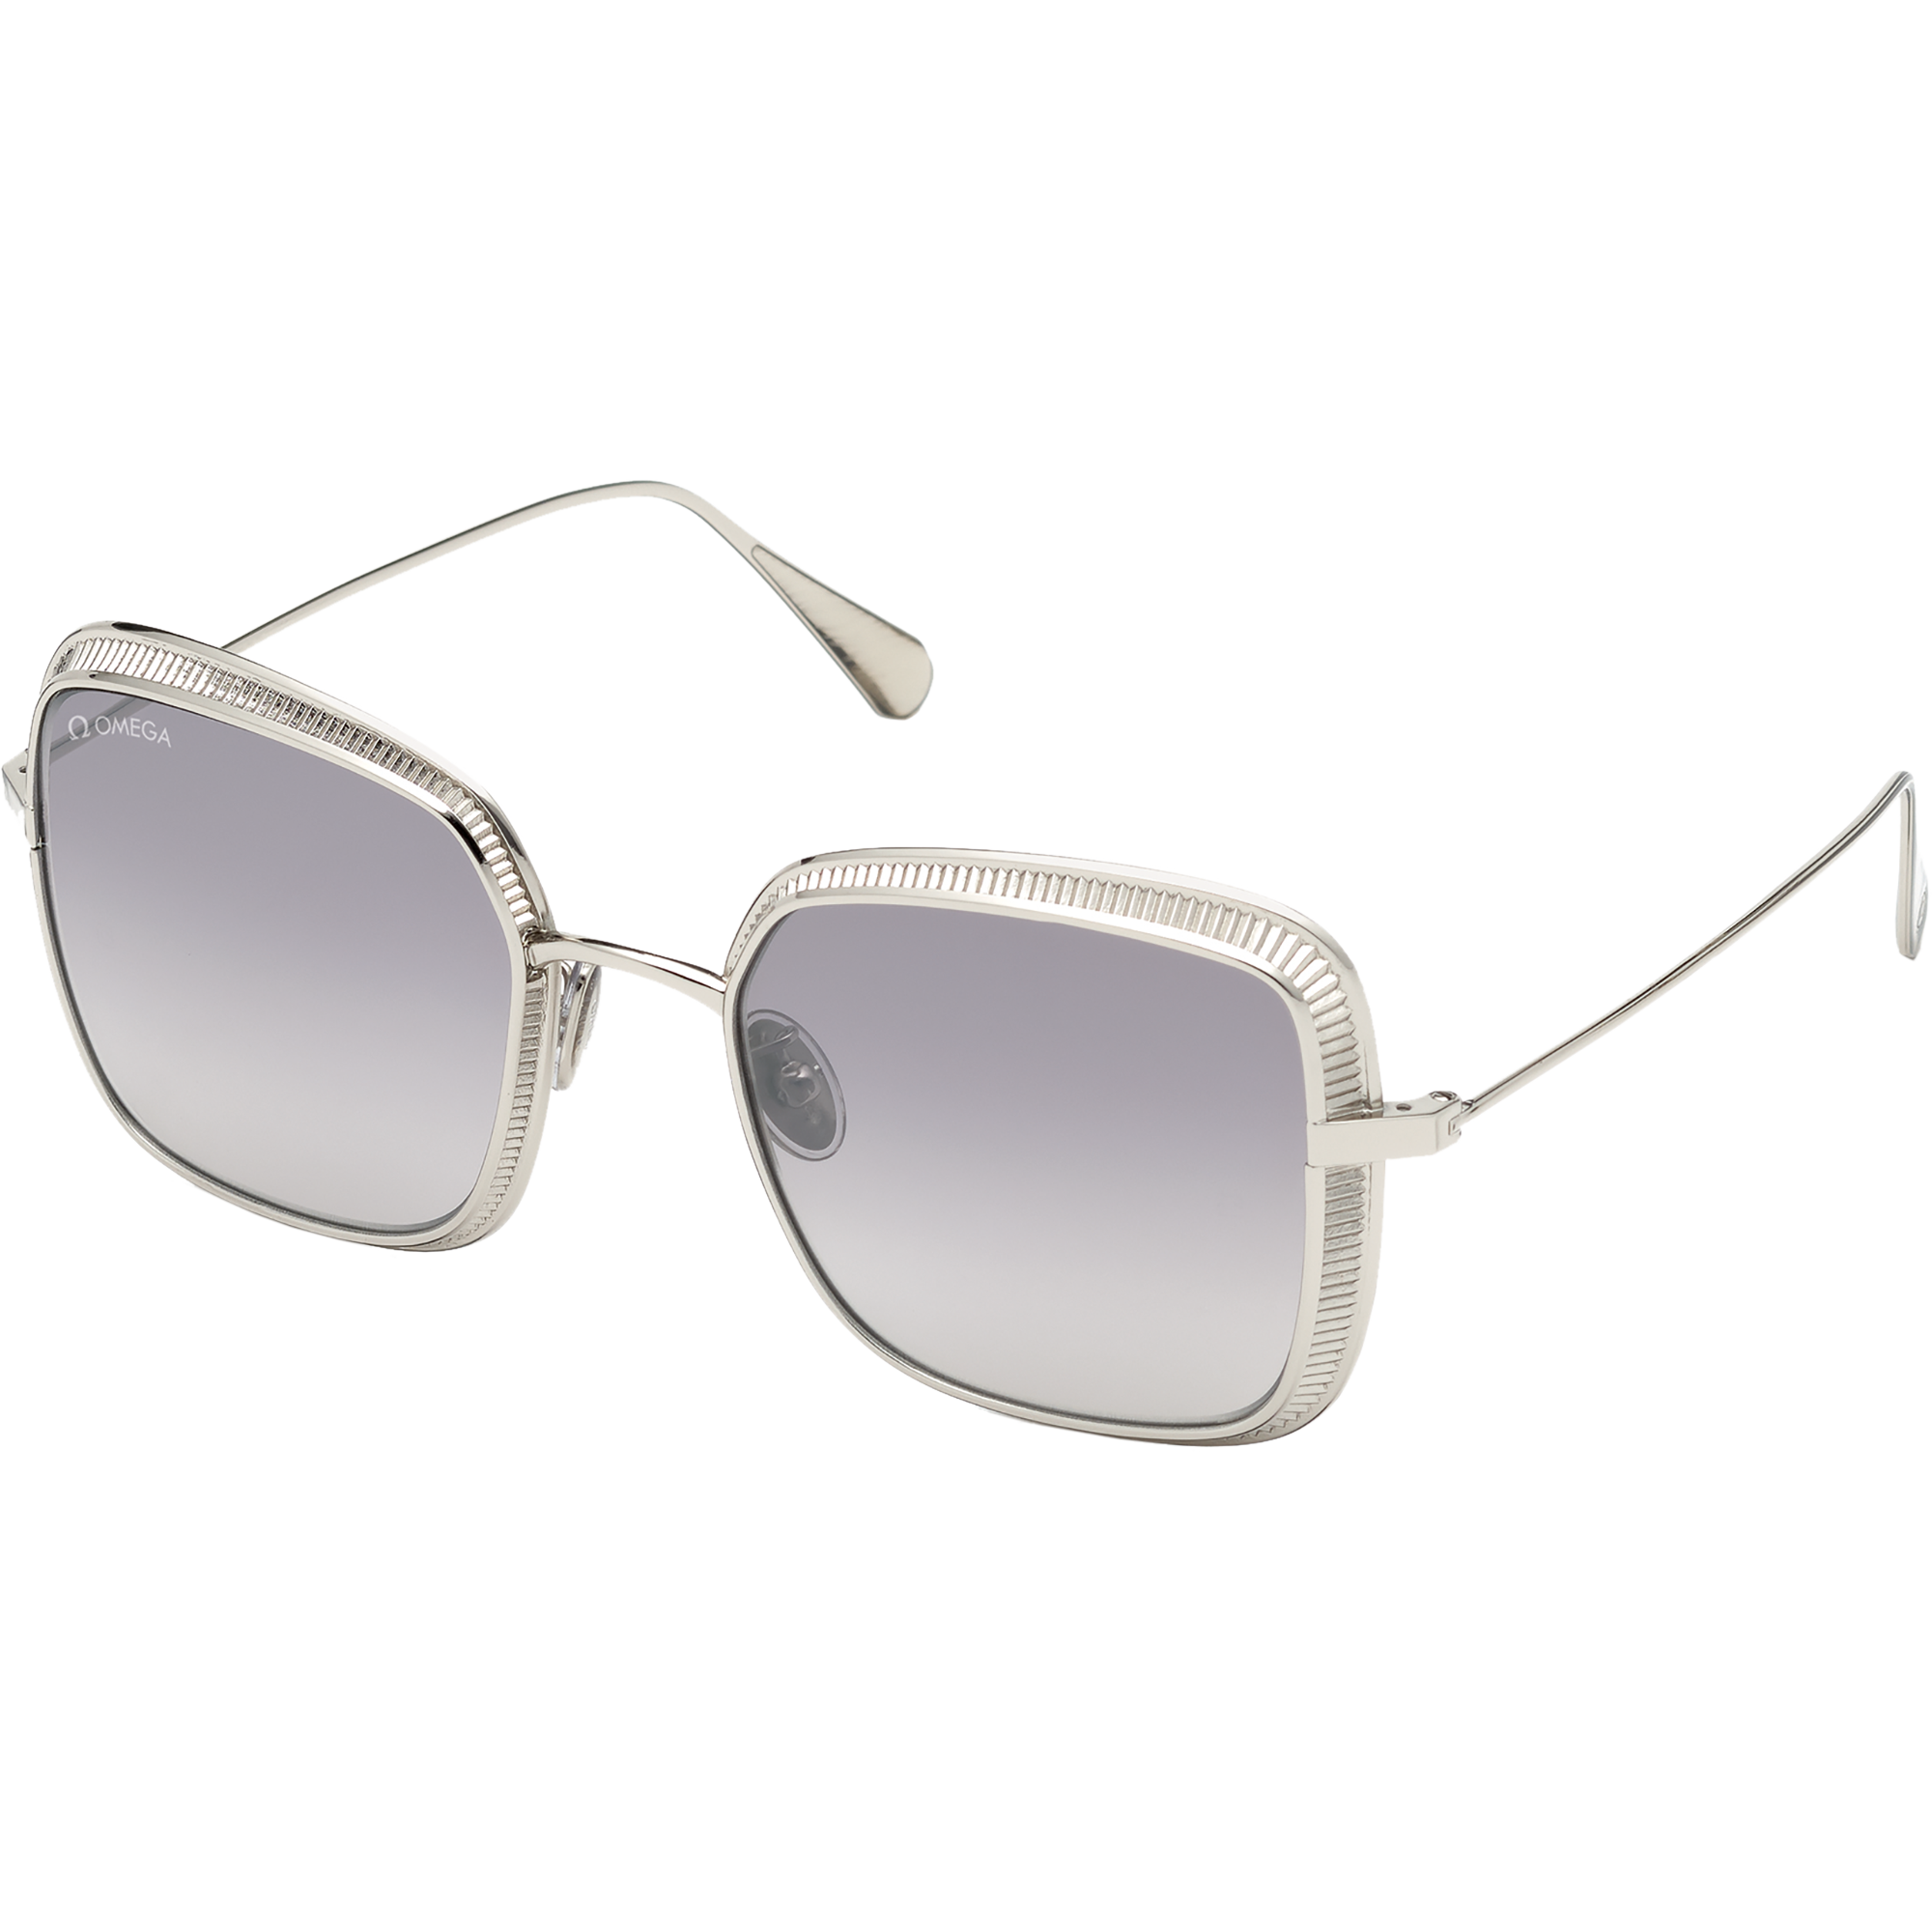 Sunglasses - Square style, Woman - OM0017-H5418C